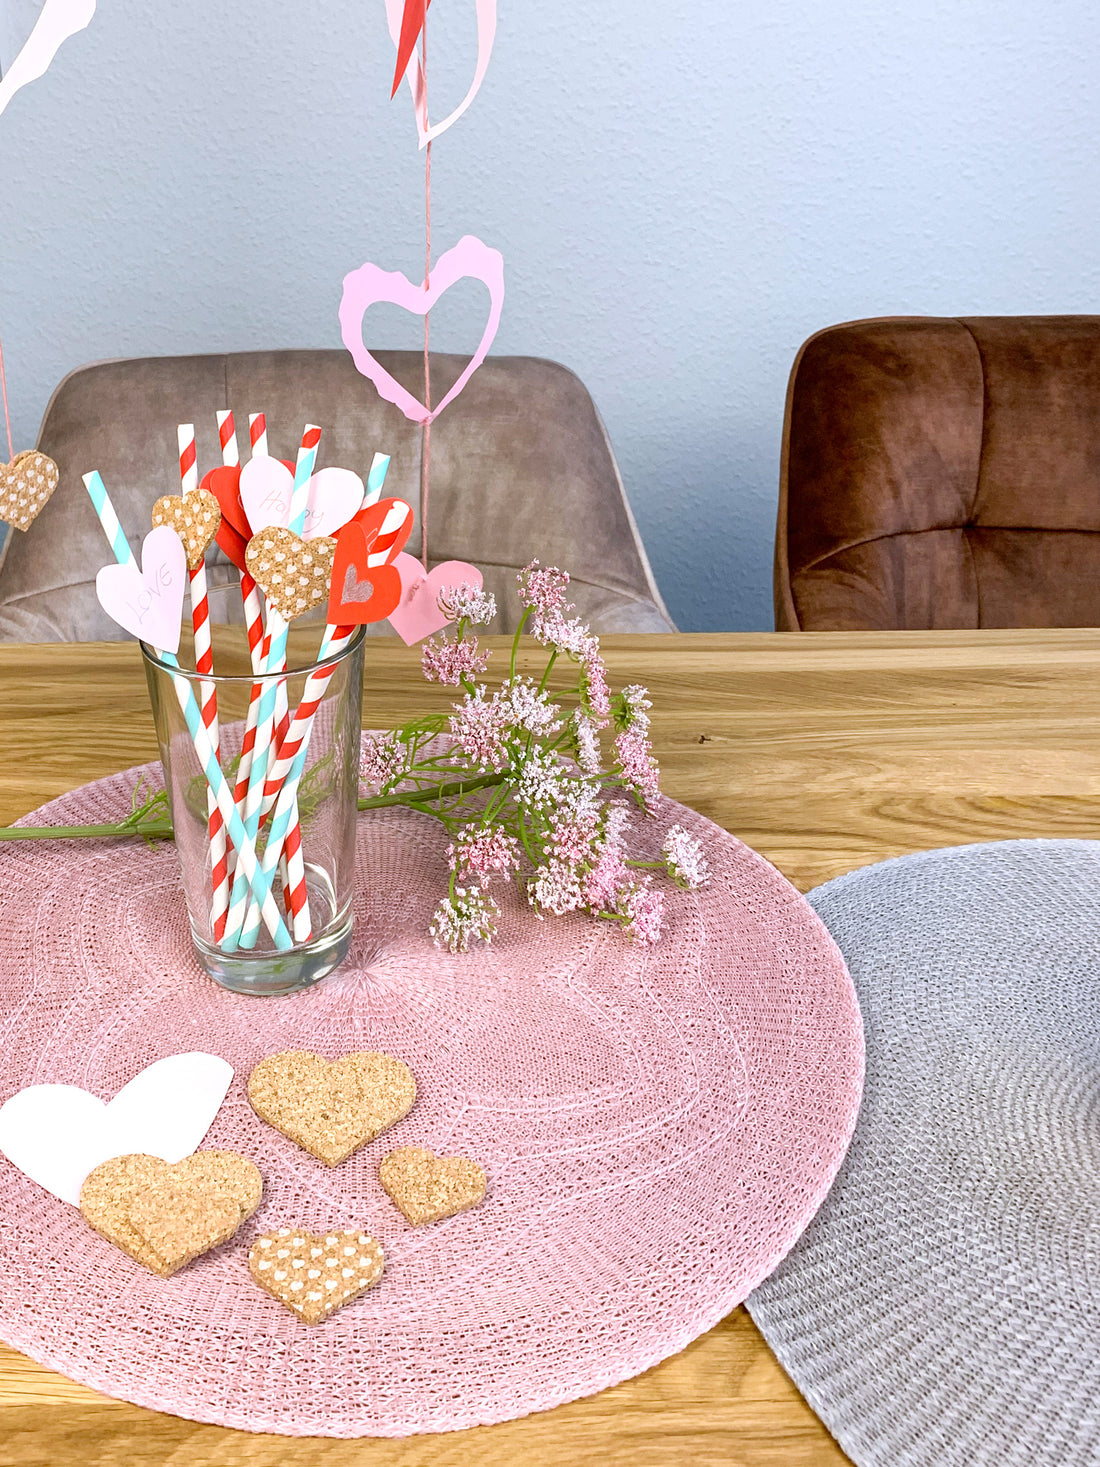 Valentine's Day DIY decor paper craft and cork hearts decor items